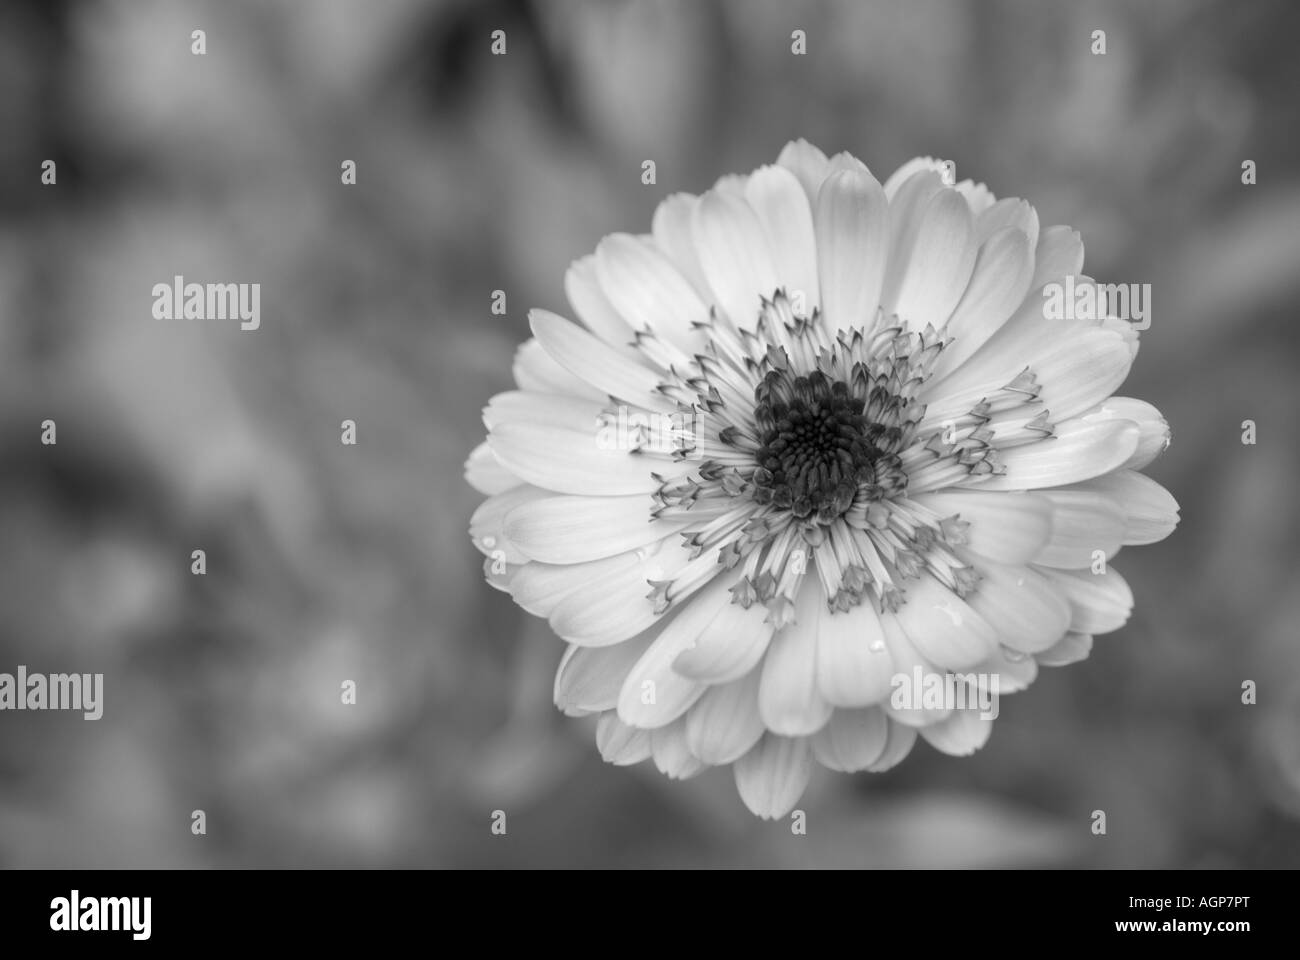 Marigold flower black and white. landscape format, subject bottom right Stock Photo